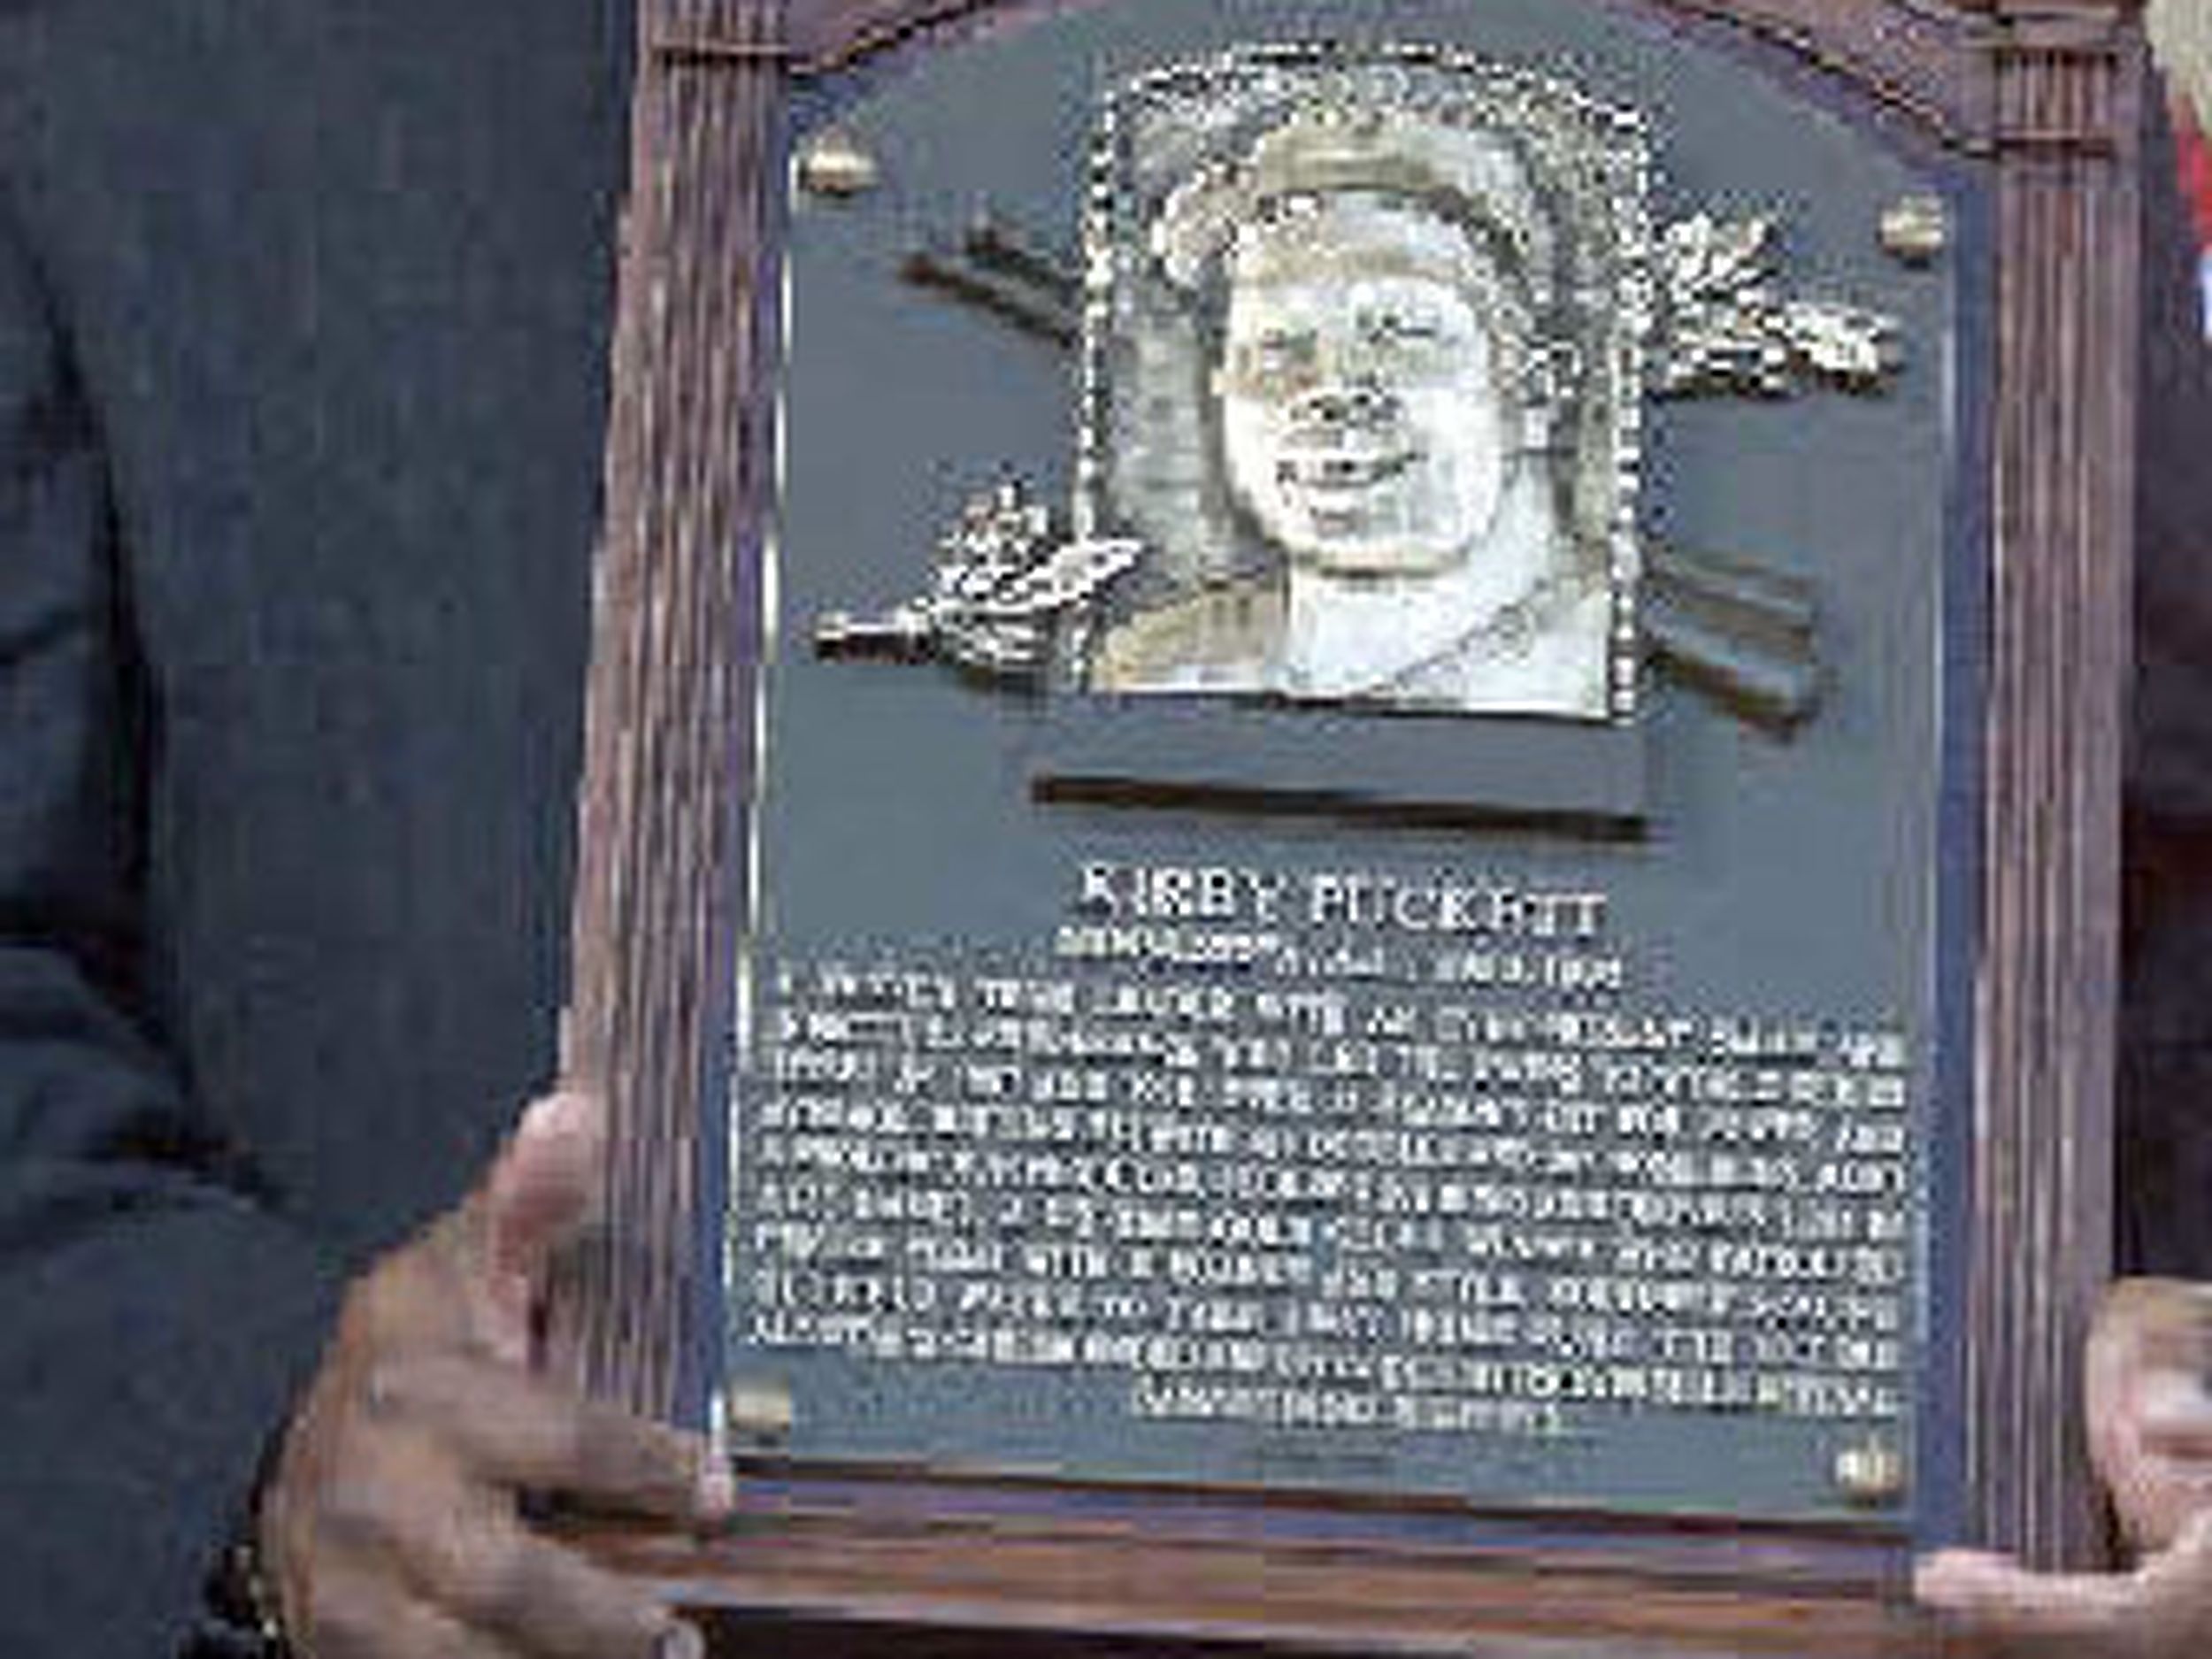 The Tragic Death Of Hall Of Fame Baseball Star Kirby Puckett